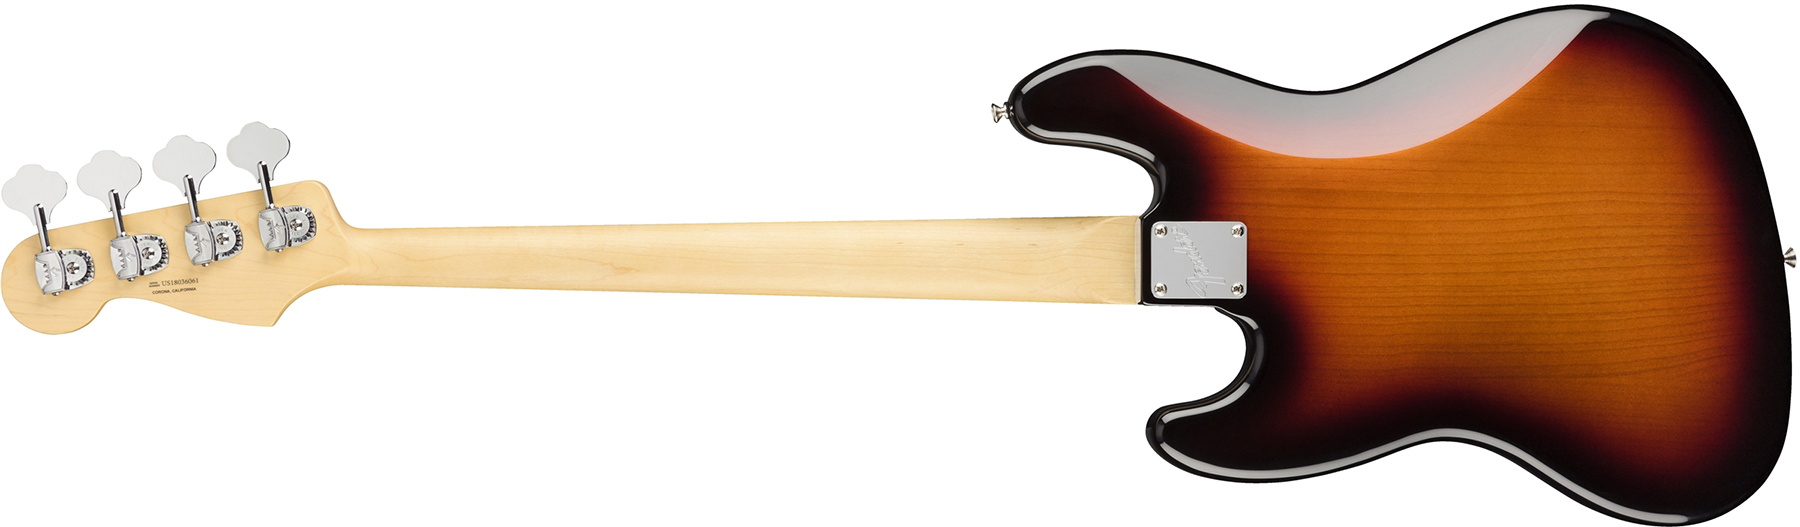 Fender Jazz Bass American Performer Usa Rw - 3-color Sunburst - Basse Électrique Solid Body - Variation 1